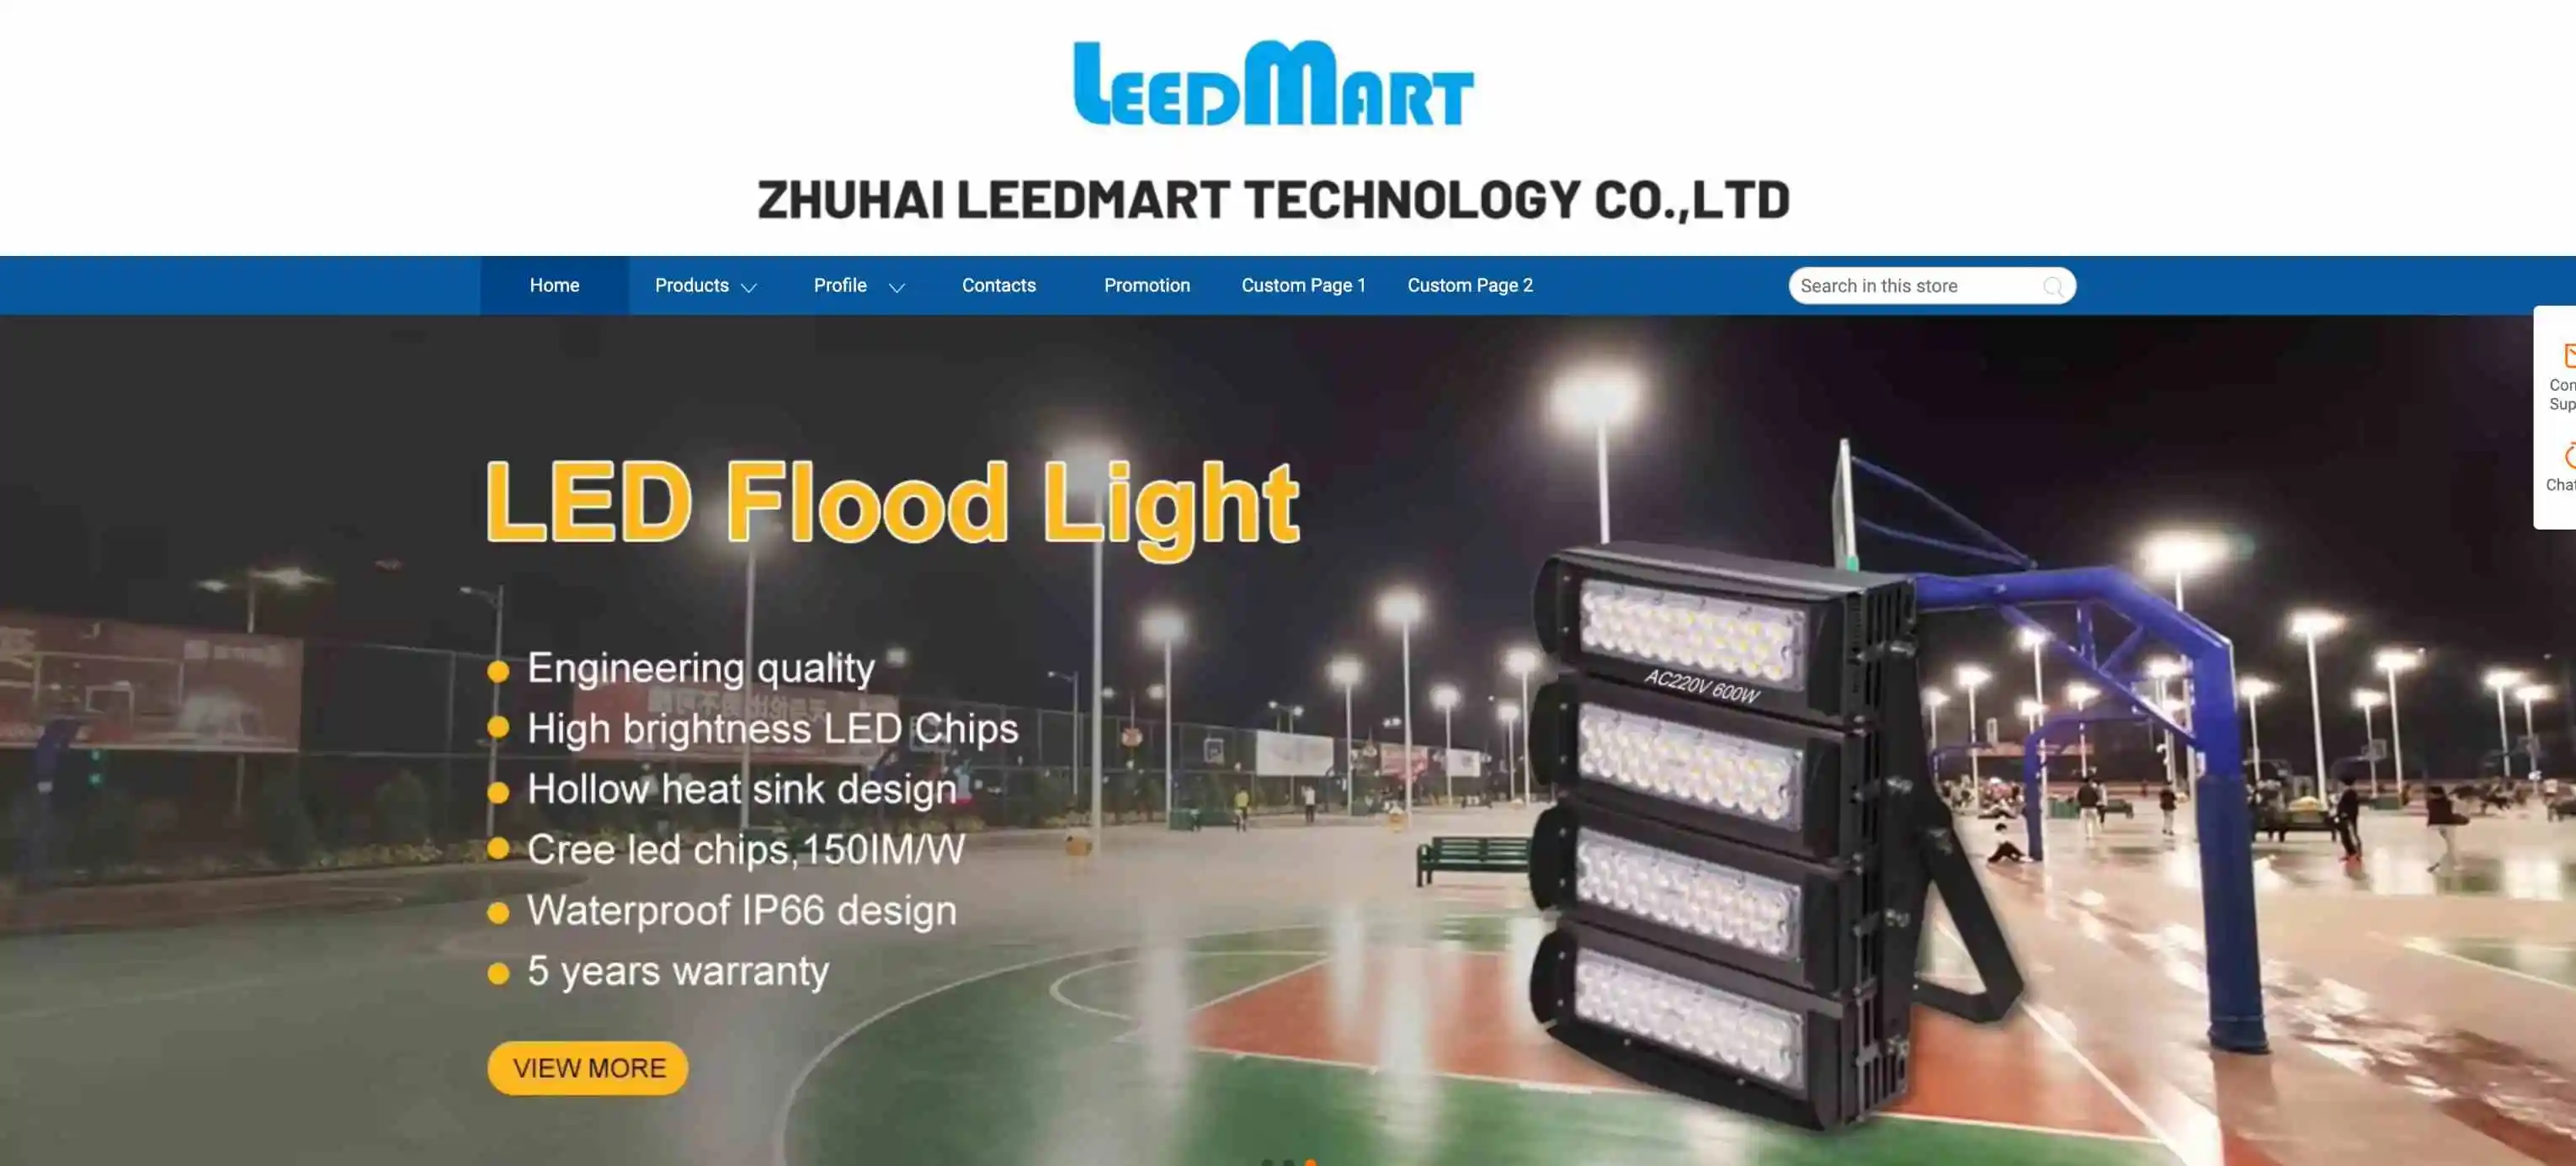 Leedmart website showcasing Lee Maker Technology Co Ltd